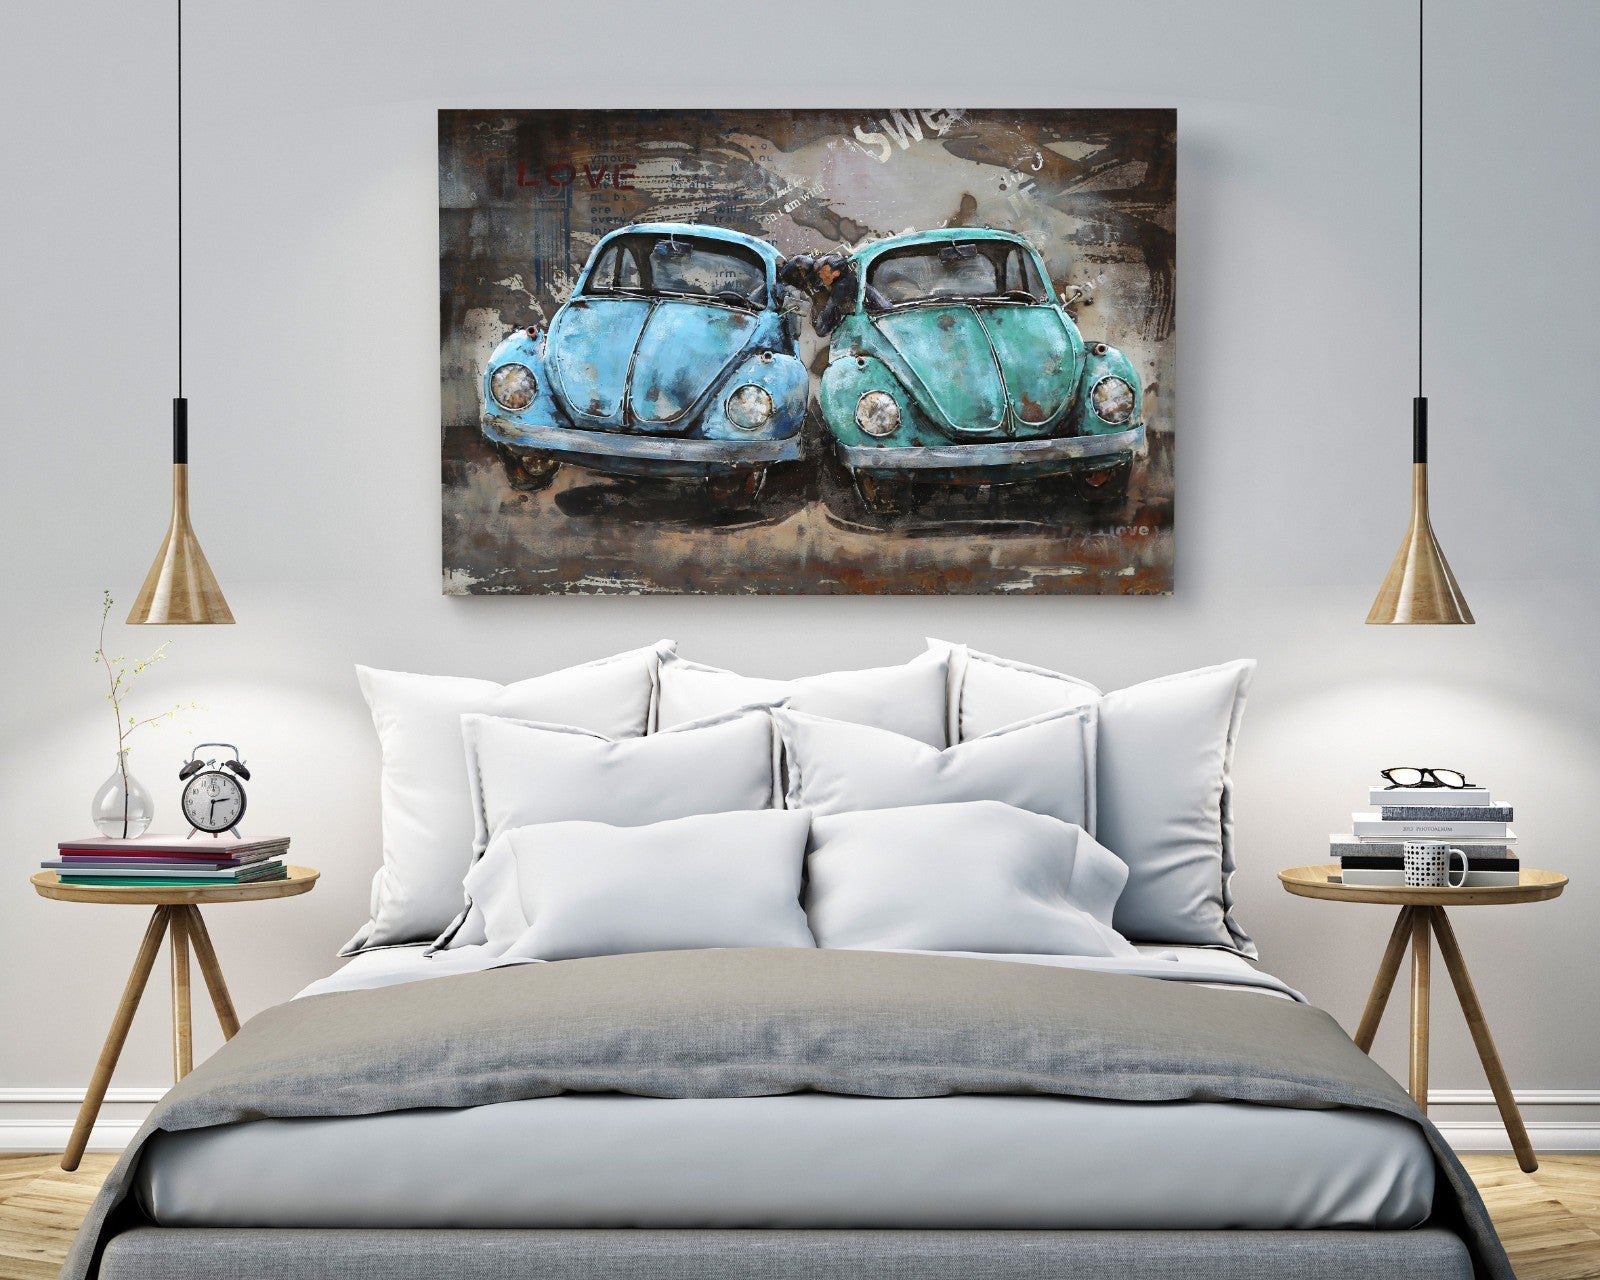 Volkswagen Beetle 3-D German automobile Car Memorabilia Trophy Decoration